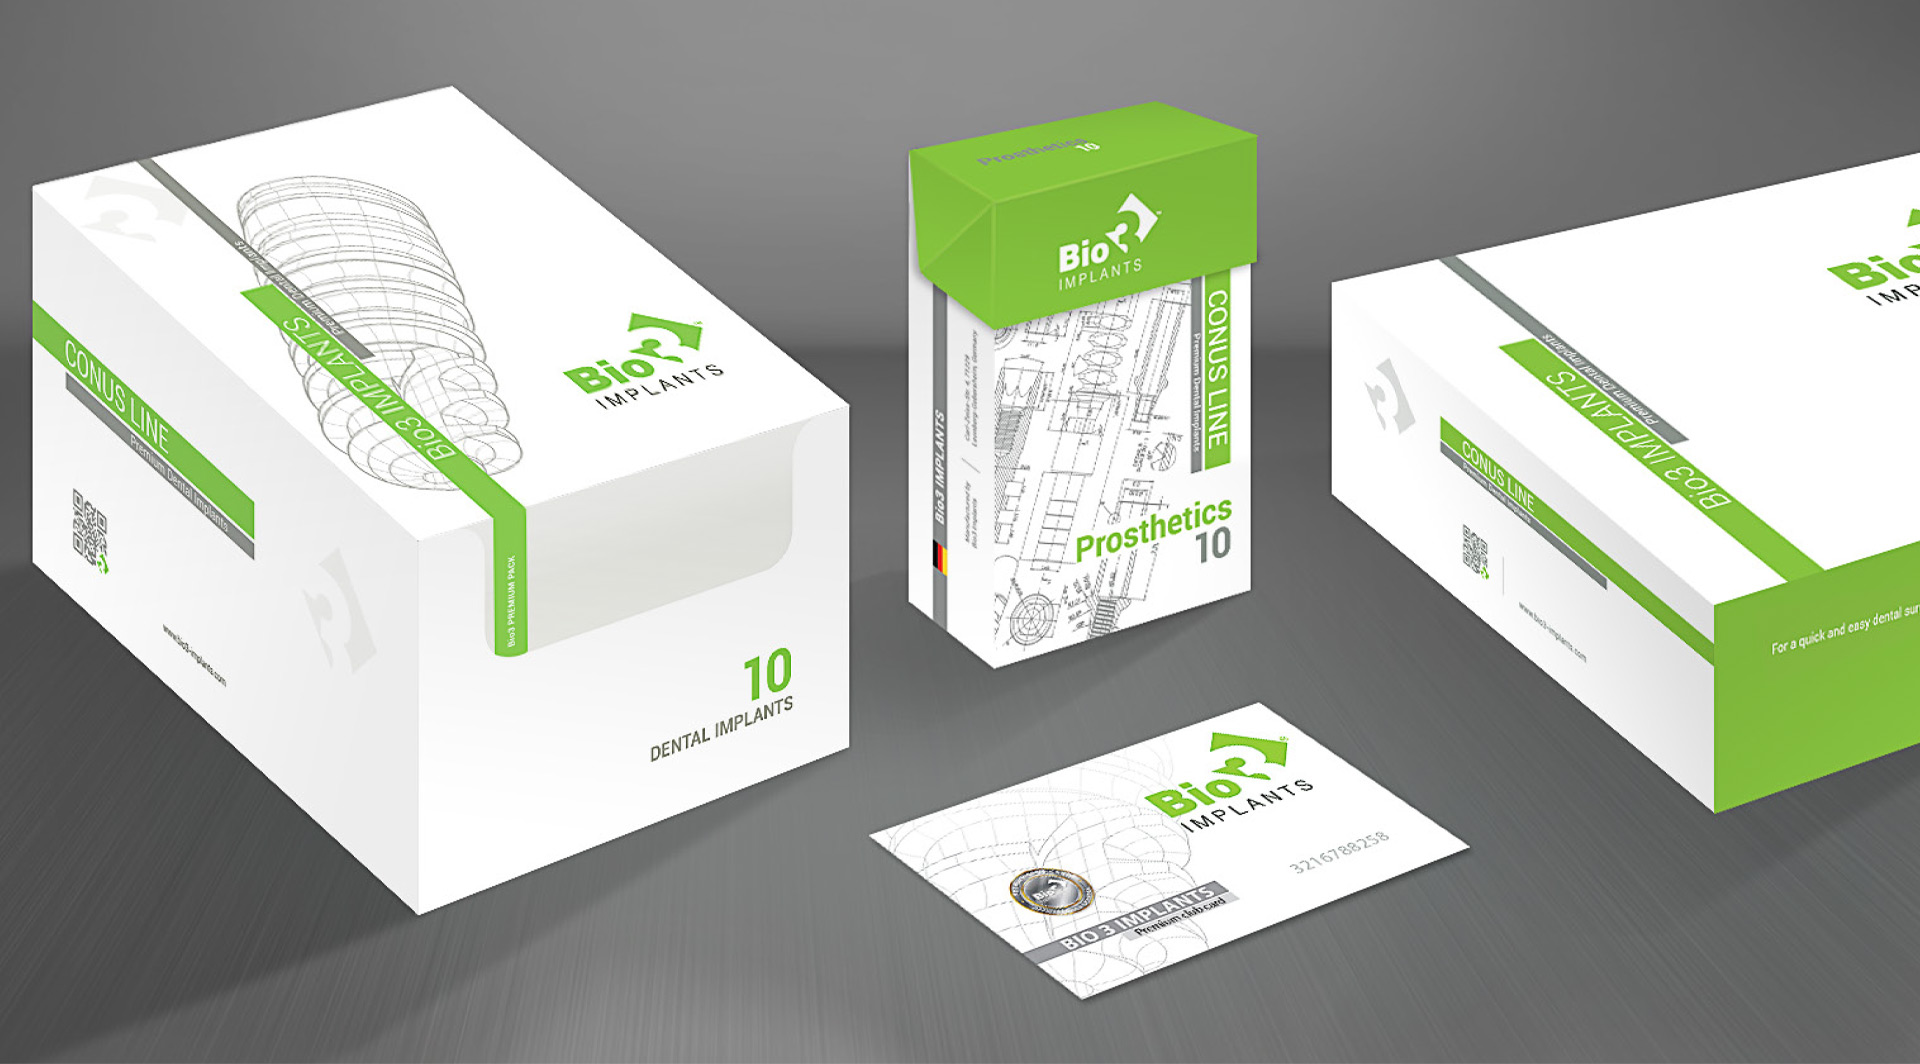 Bio3 Implants package design